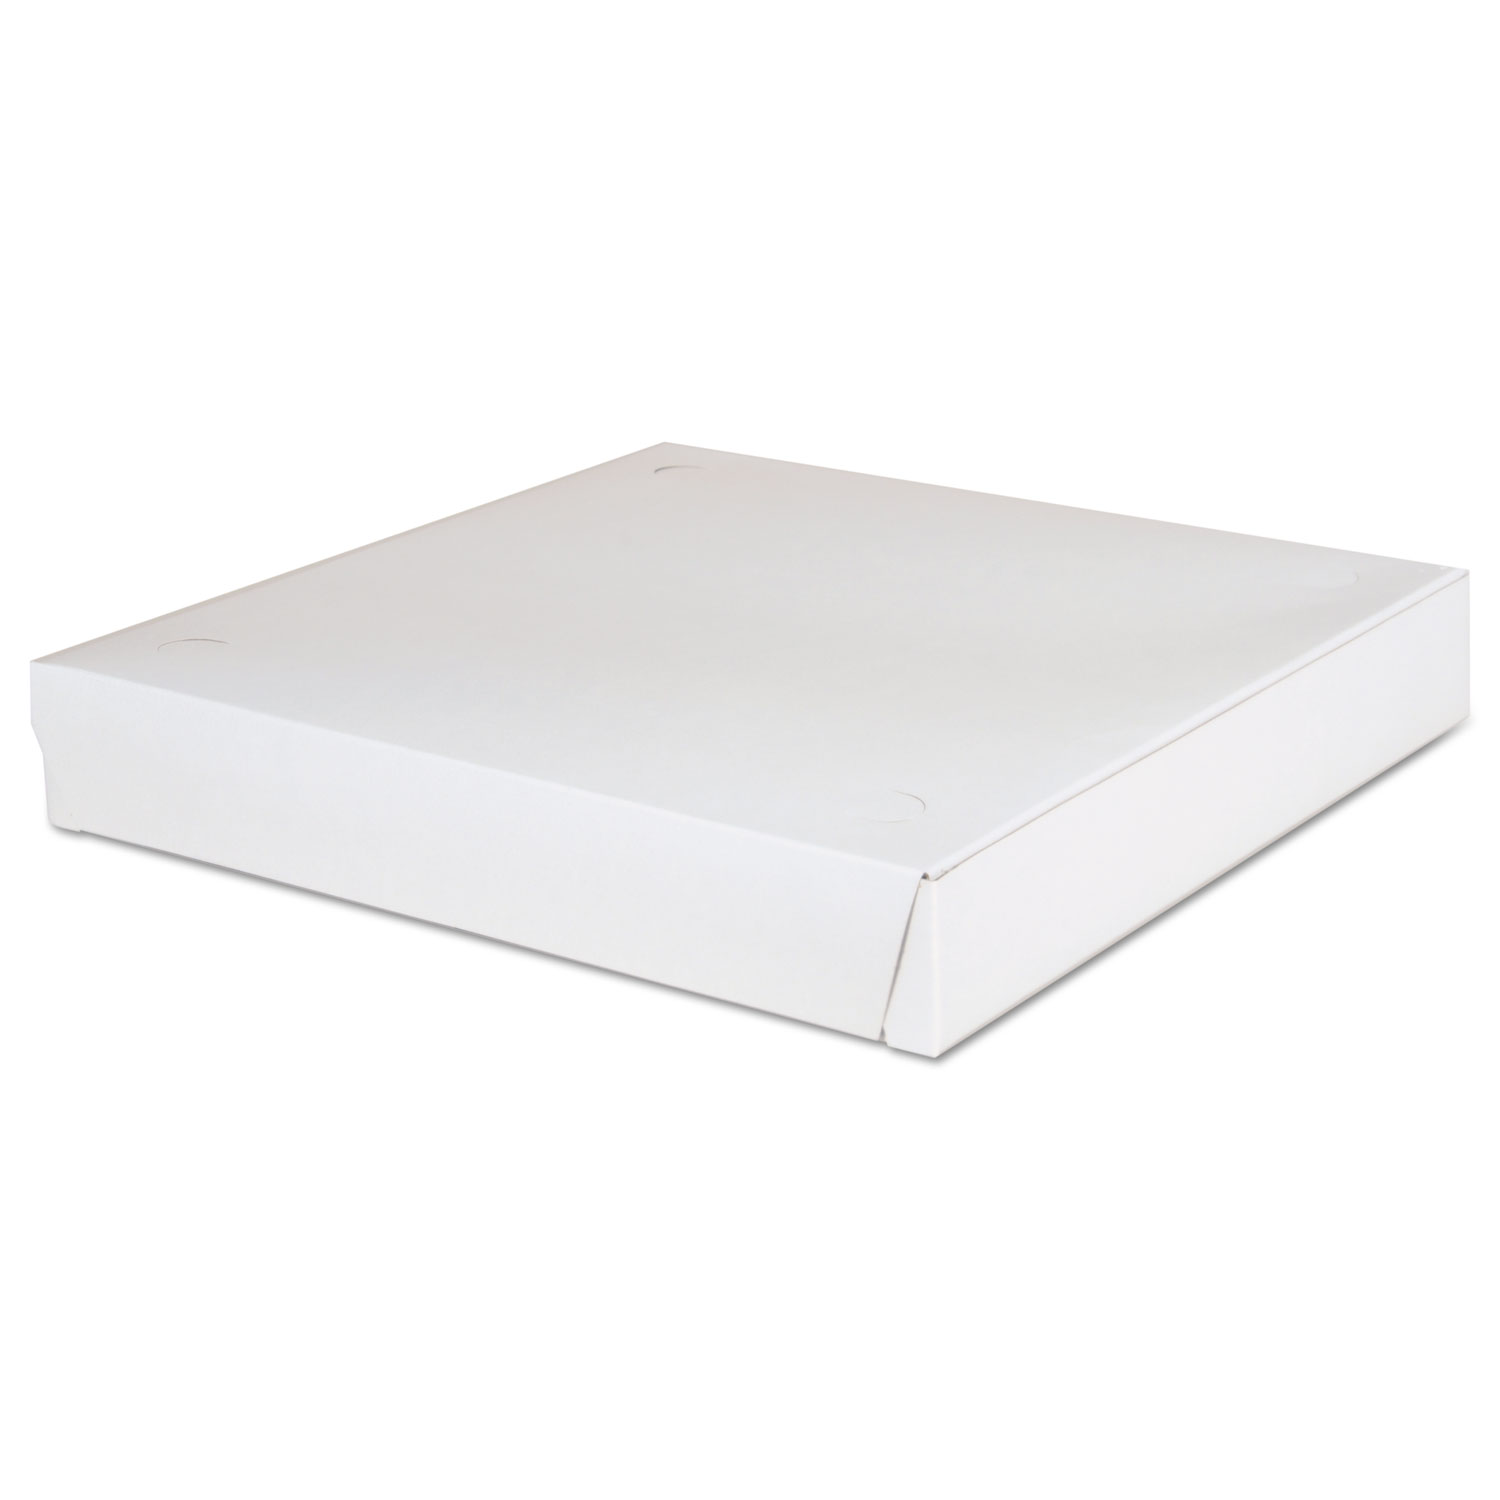  SCT 1460 Lock-Corner Pizza Boxes, 12 x 12 x 1 7/8, White, 100/Carton (SCH1460) 